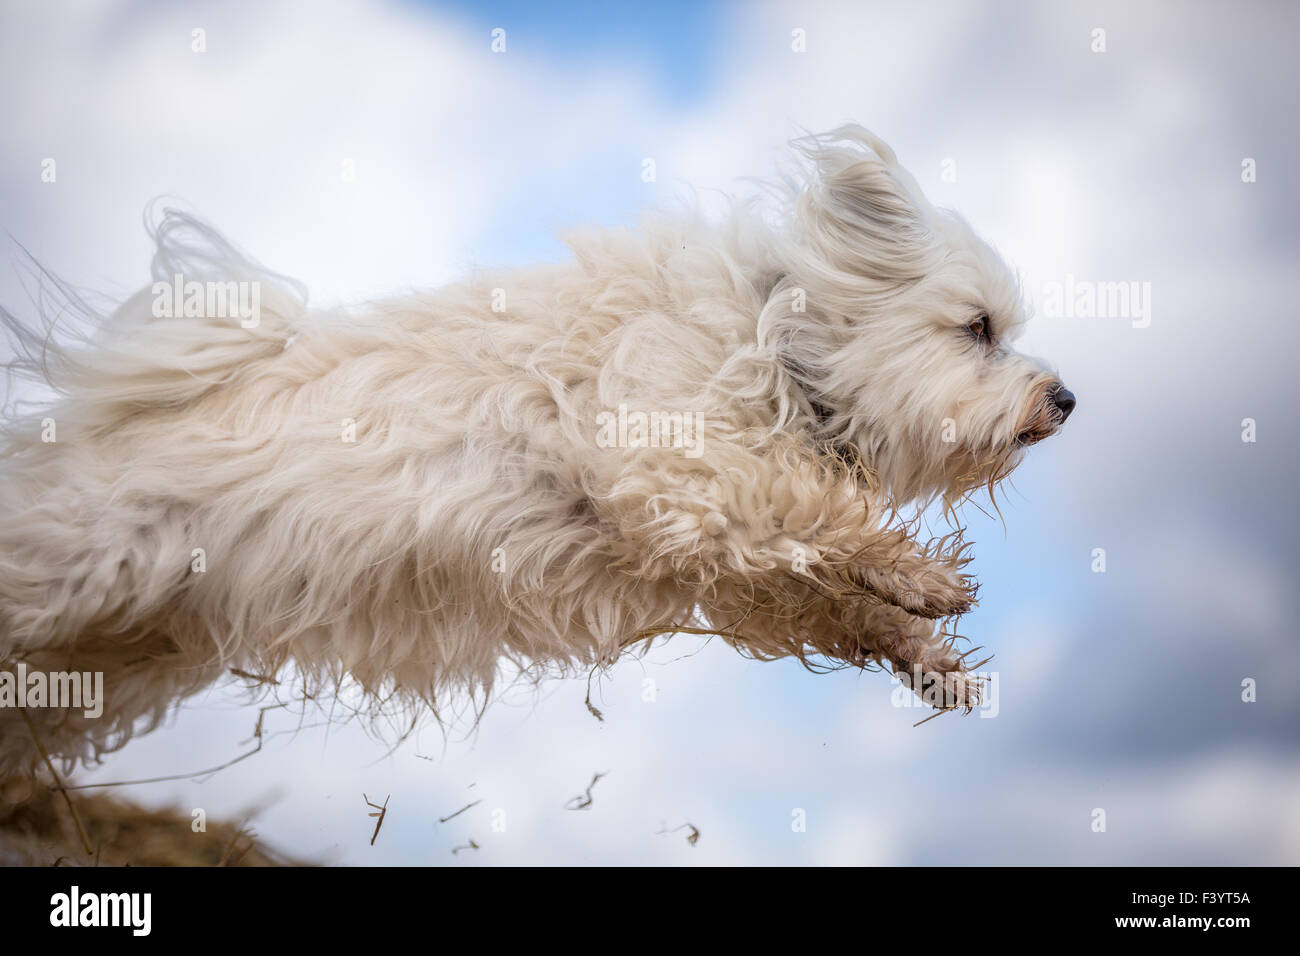 Jumping dog Stock Photo